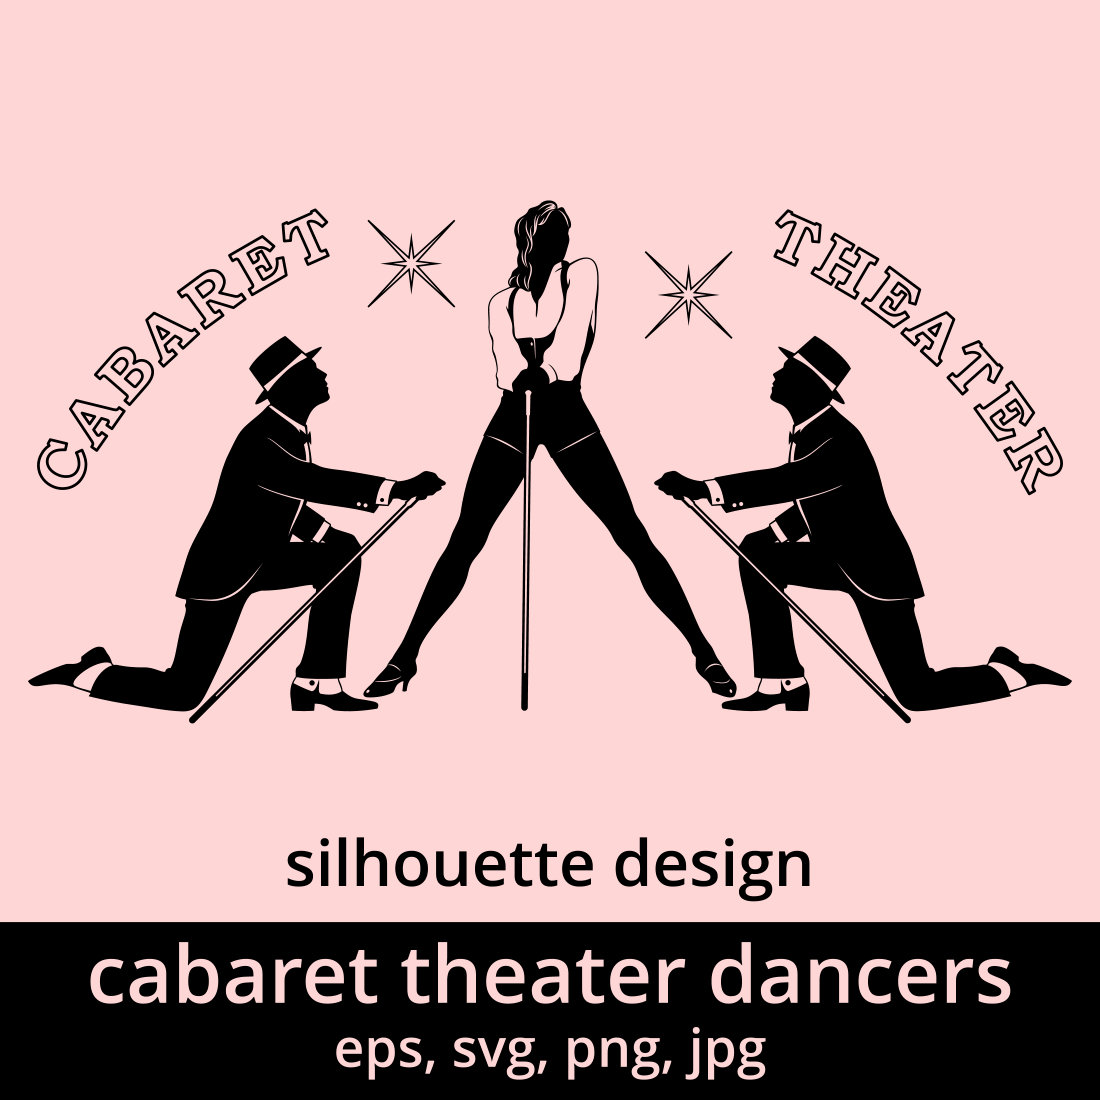 Cabaret Dancers Silhouettes SVG cover image.